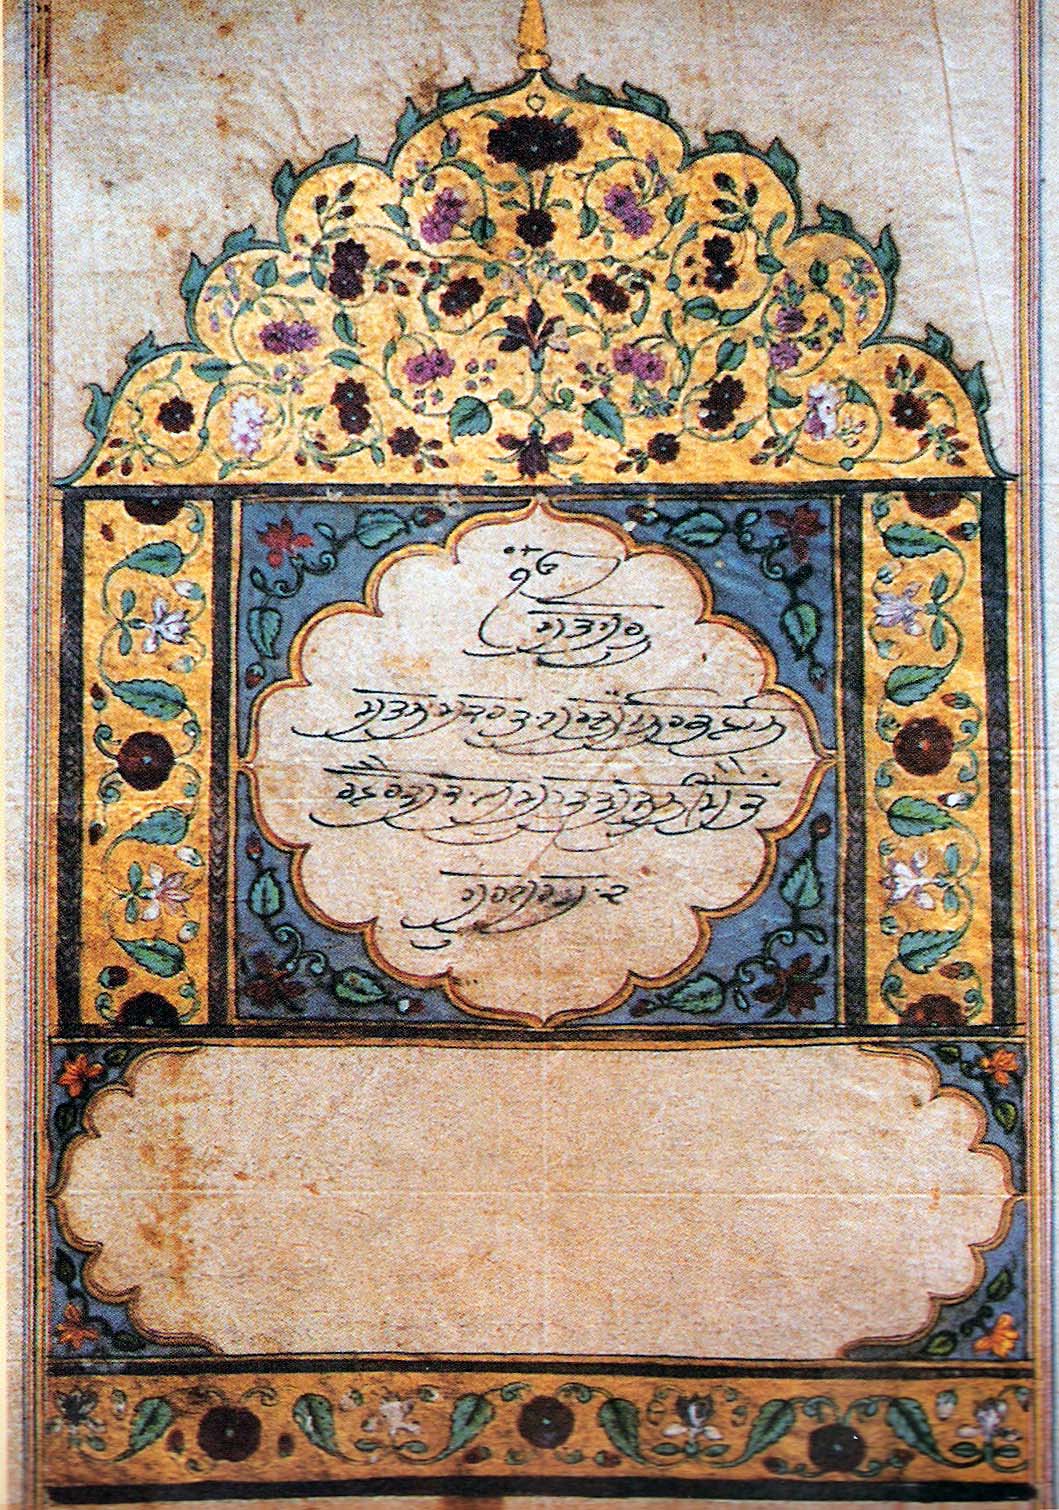 http://upload.wikimedia.org/wikipedia/commons/a/a2/Sri_Guru_Granth_Sahib_Nishan.jpg